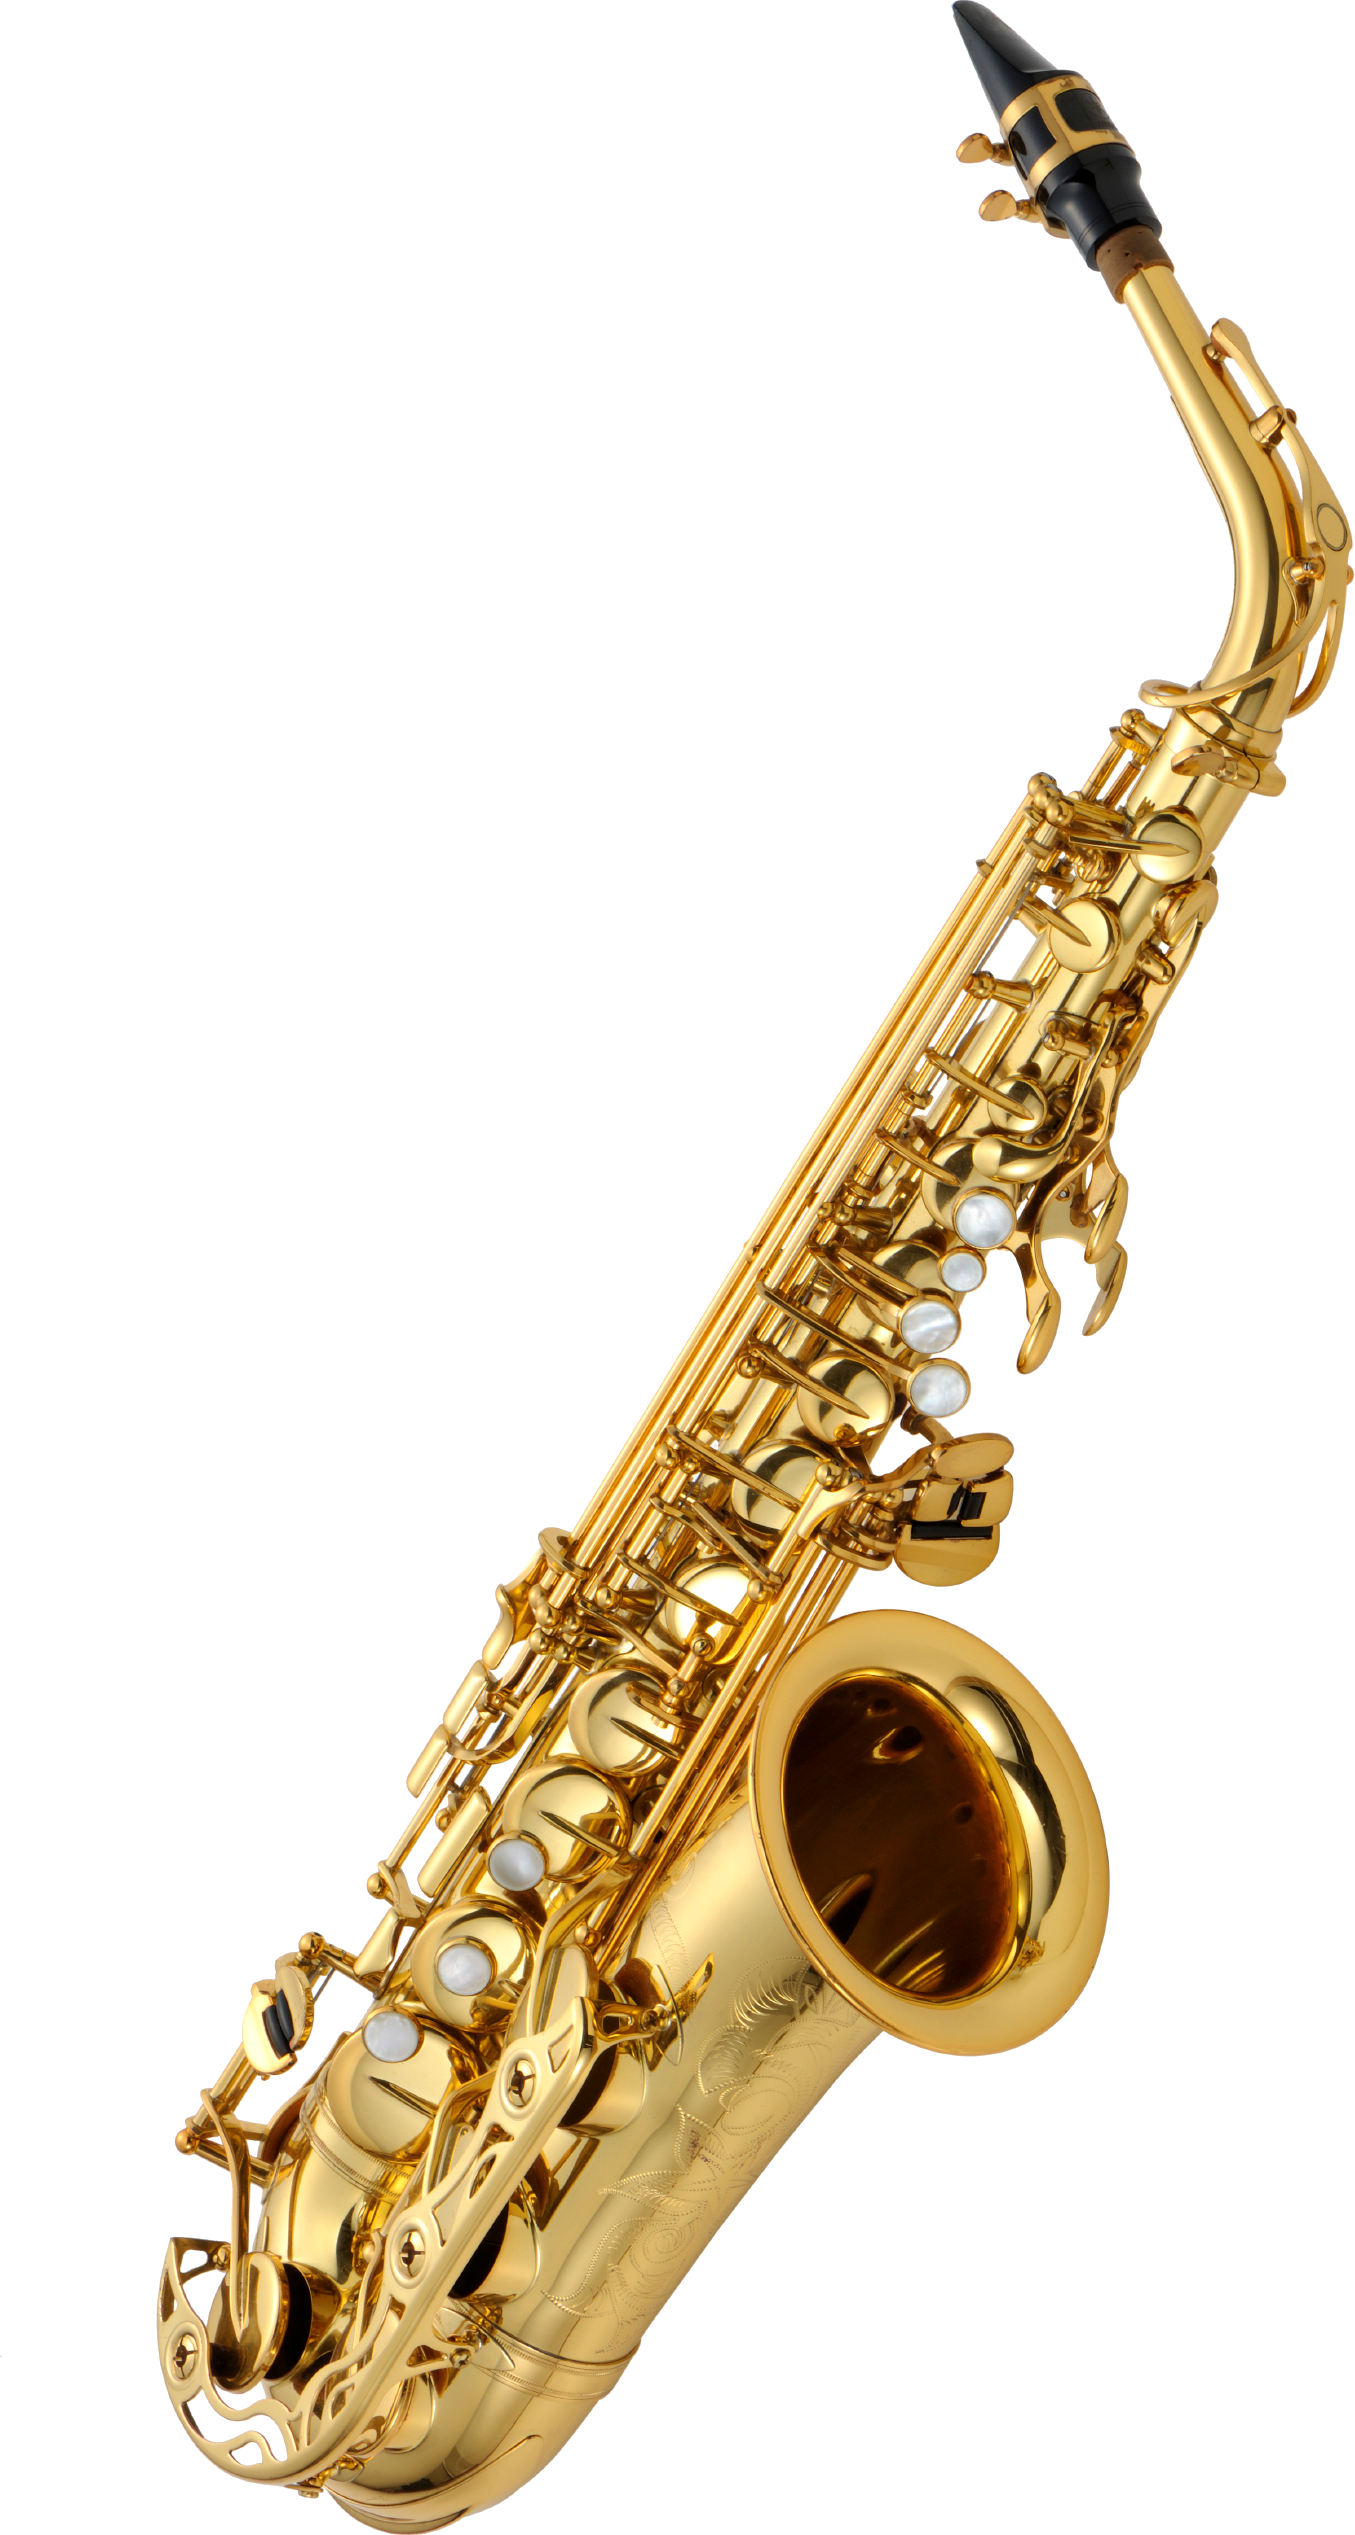 Saxophone Transparent